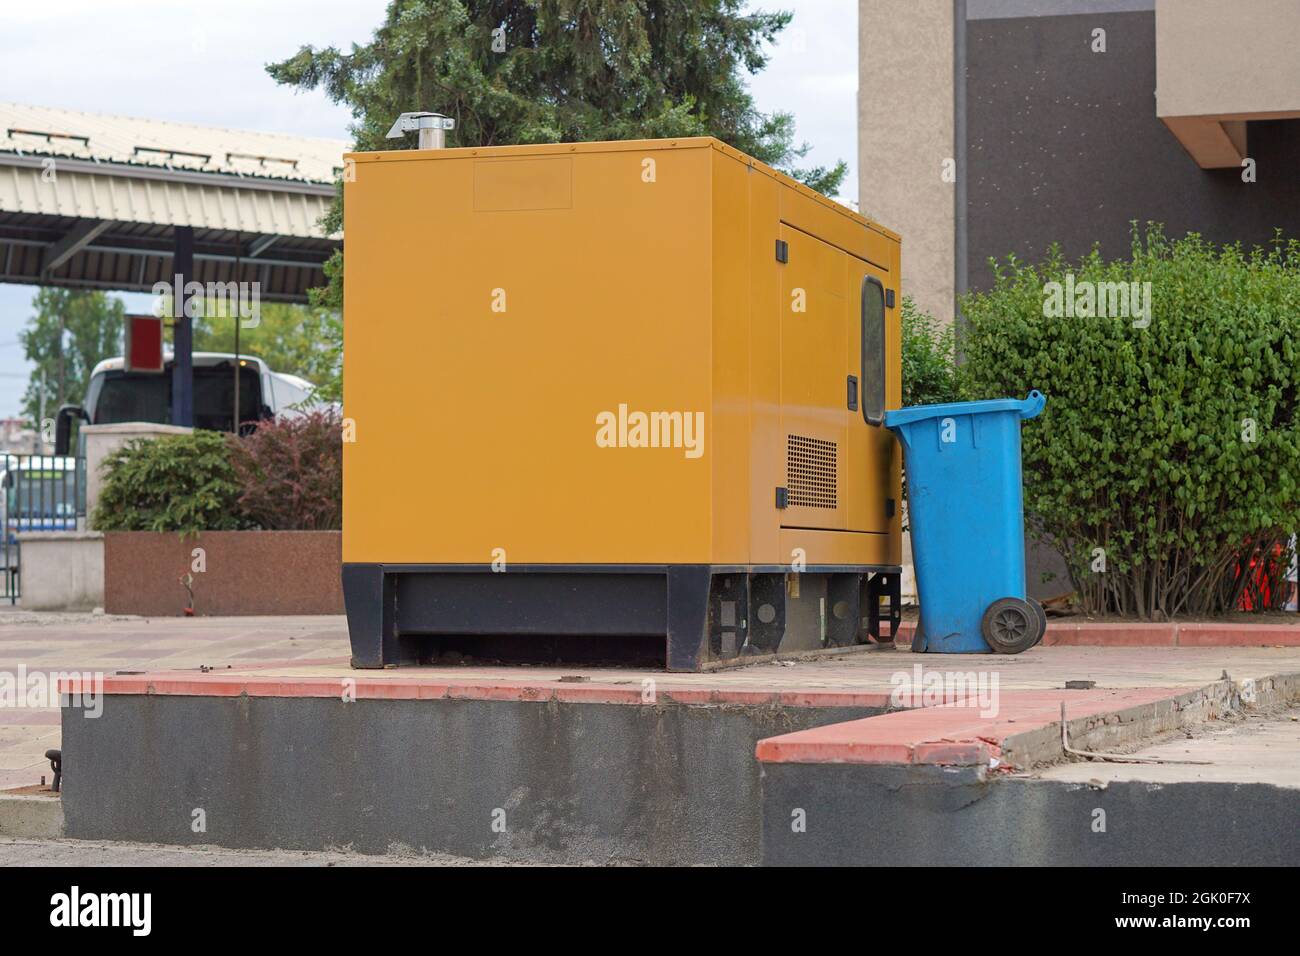 Emergency electric power generator box and garbage bin Stock Photo - Alamy